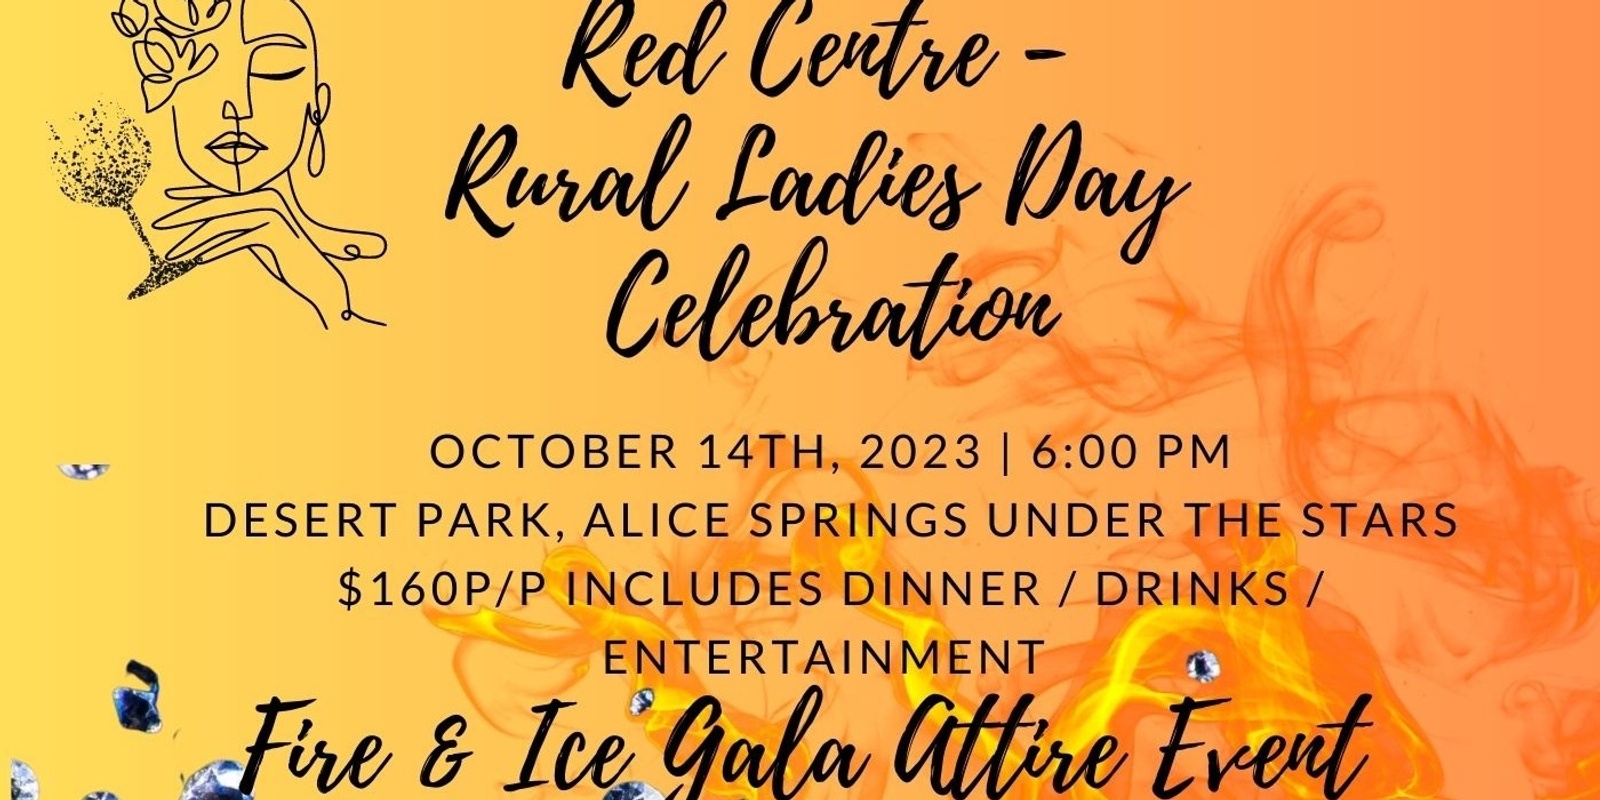 Banner image for Red Centre - Rural Ladies Day Celebration